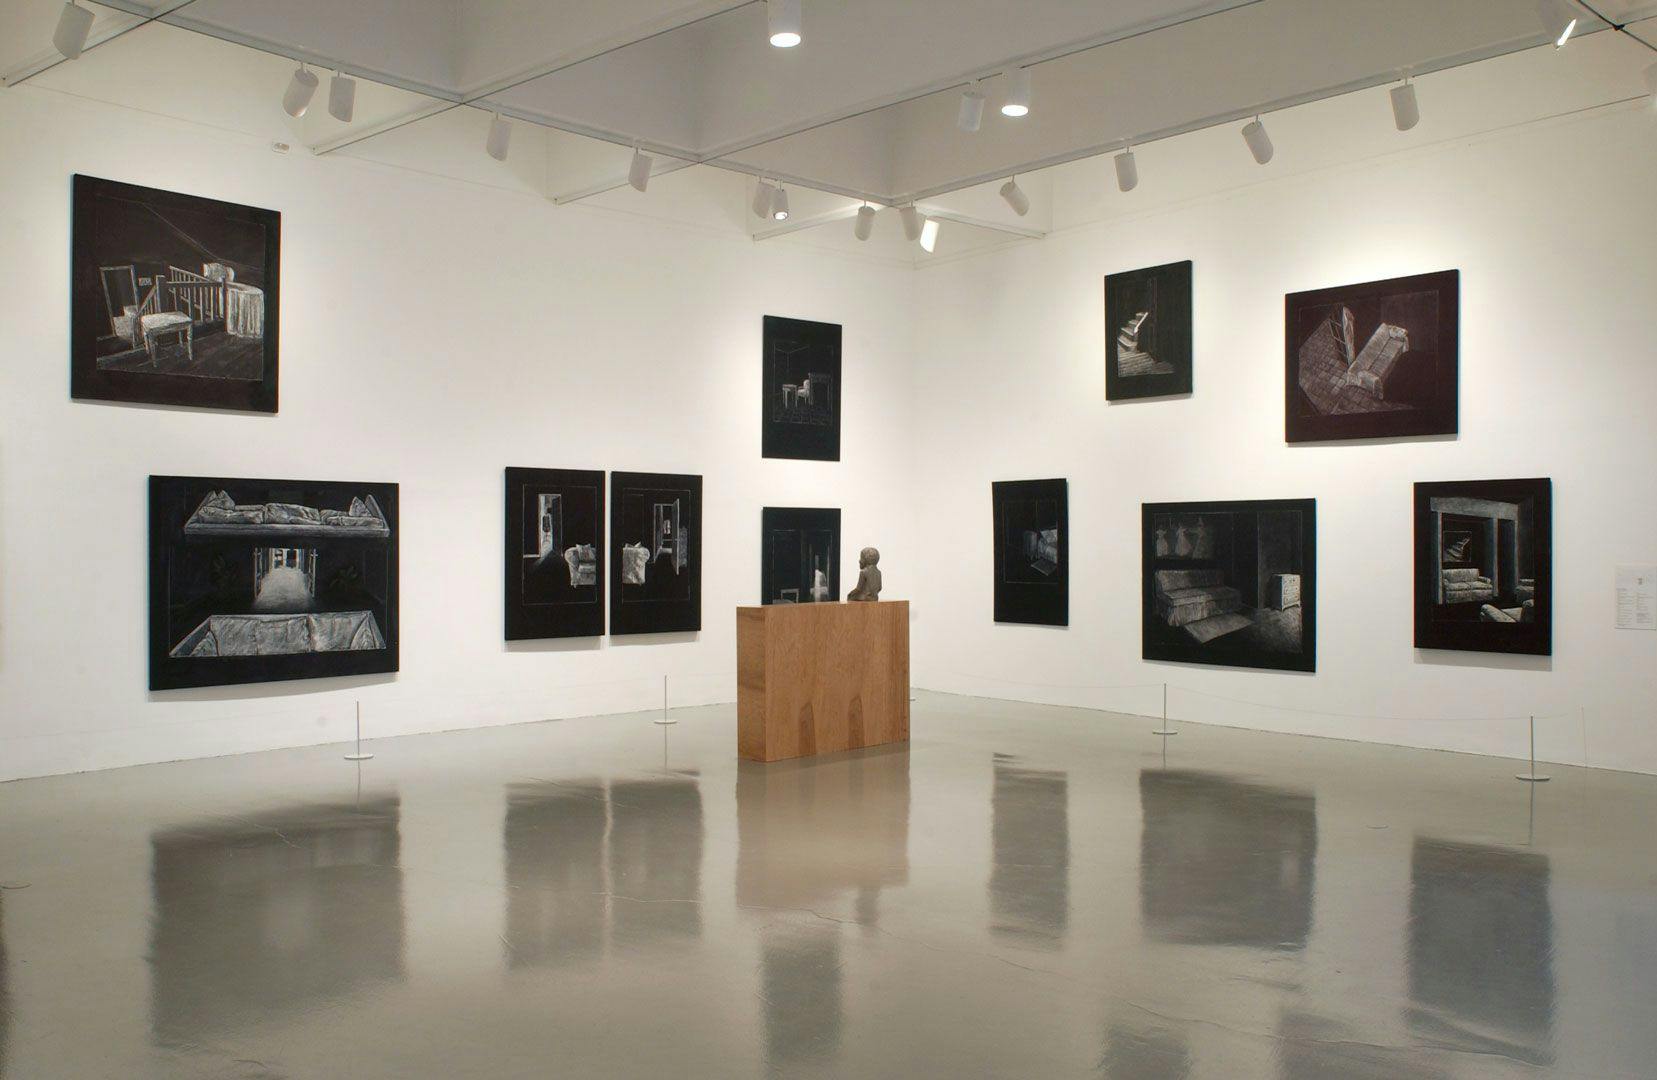 An installation view of the exhibition Juan Muñoz, at Hirshhorn Museum and Sculpture Garden, Smithsonian Institution, Washington, D.C., dated 2001. 